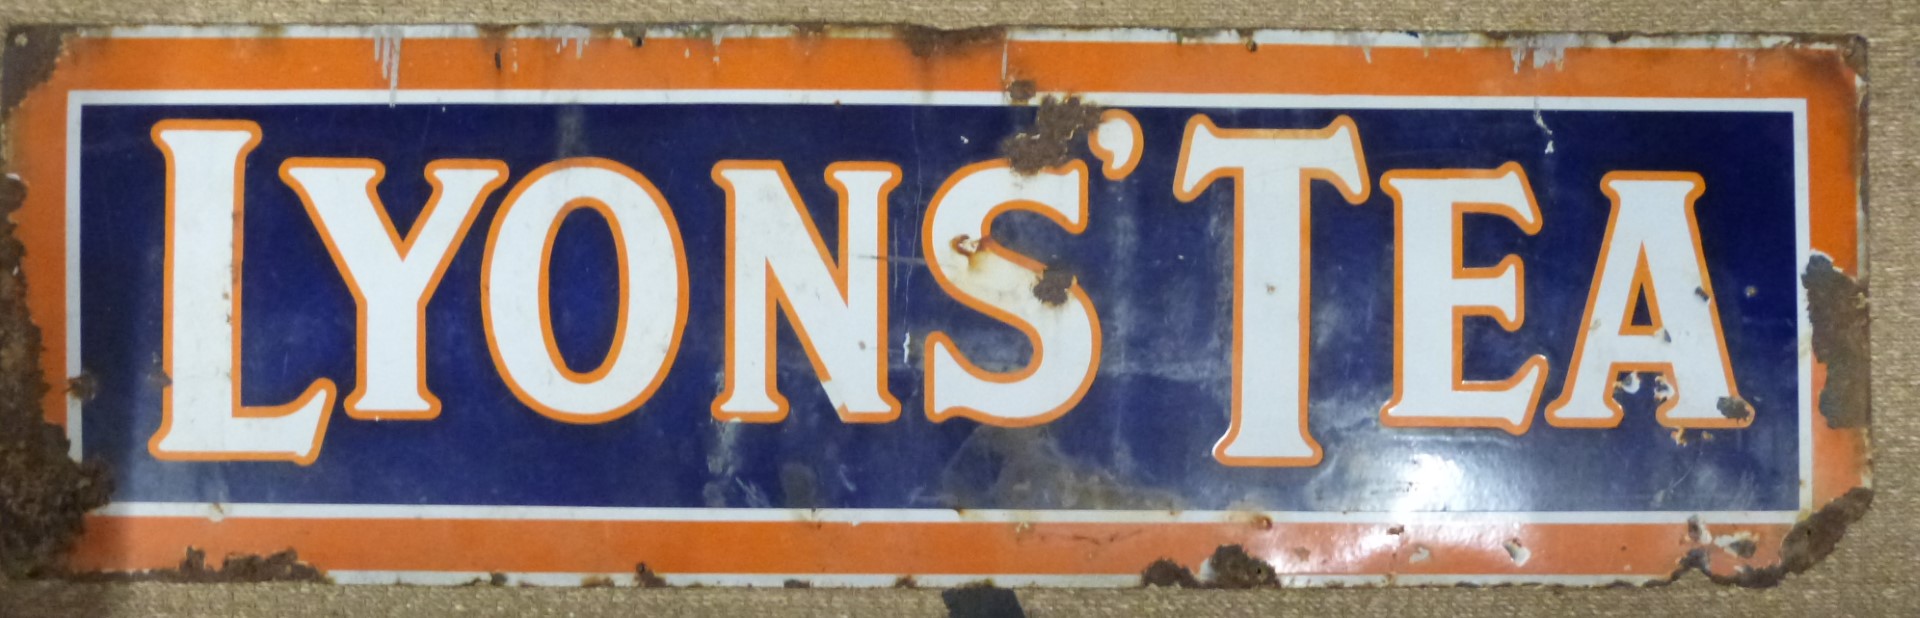 Lyons tea vintage enamel advertising sign, 46 x 153cm - Image 2 of 2